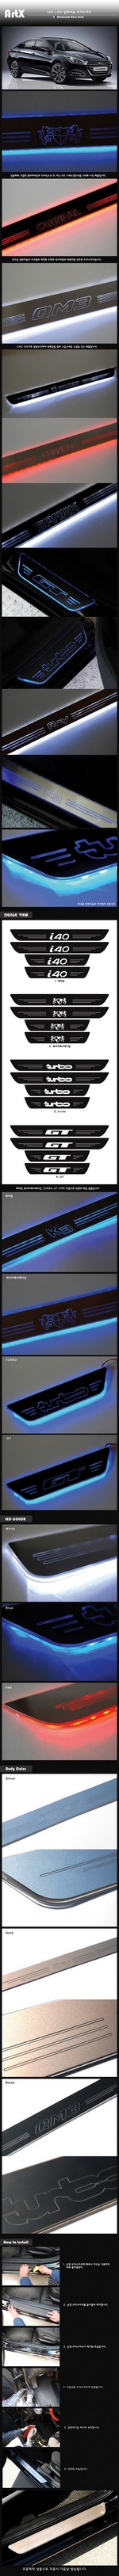 Накладки на пороги алюминиевые с подсветкой (вариант 2) ArtX Hyundai i40 2011-2019